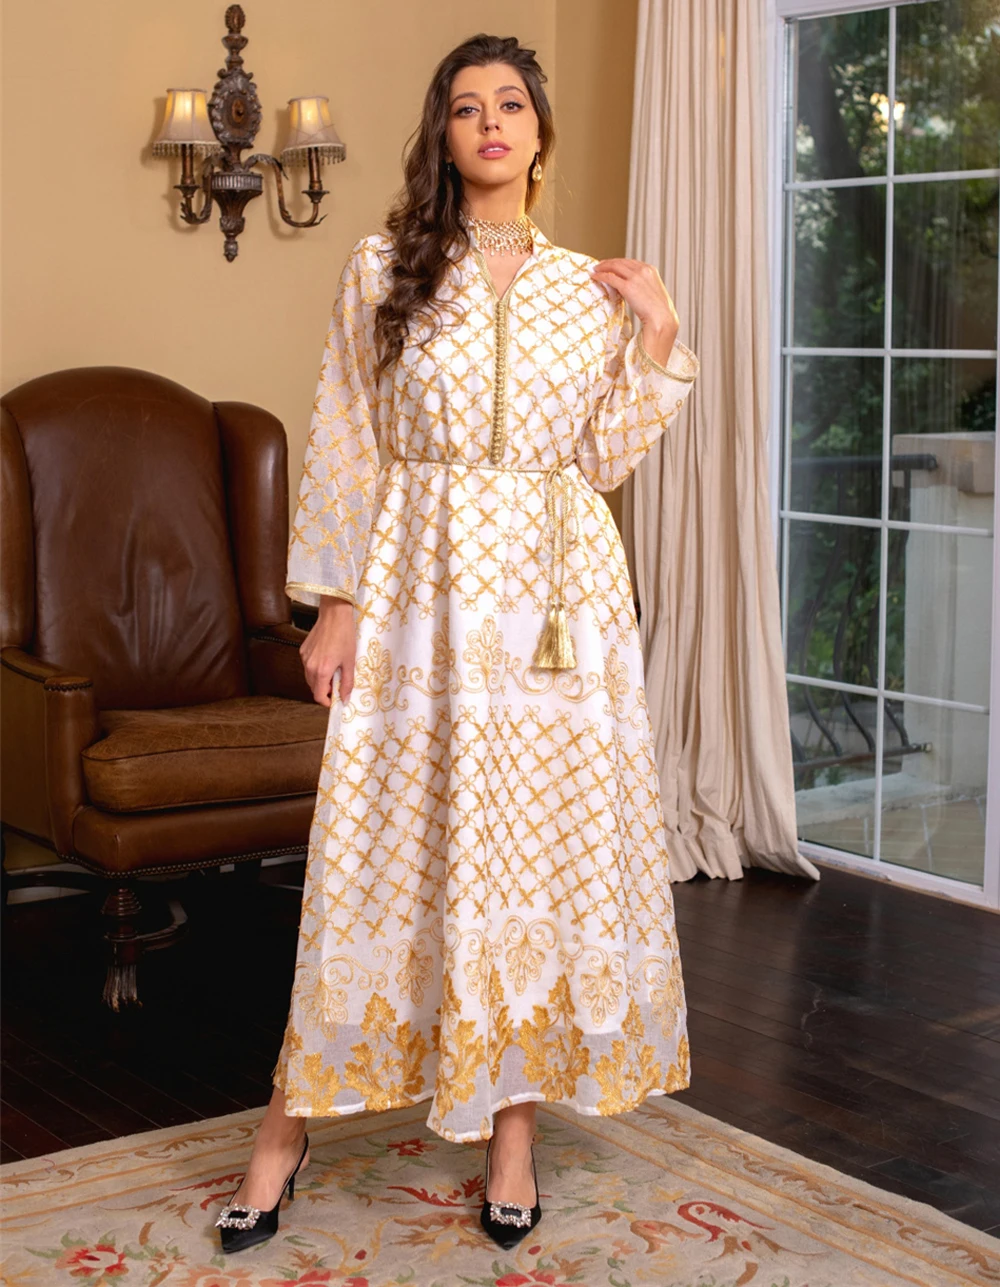 

MD Elegant Dress Women For Wedding Party Long Sleeve Abaya Muslim Fashion Boubou Dubai Turkey Lady Islamic Clothing Kaftan Robe